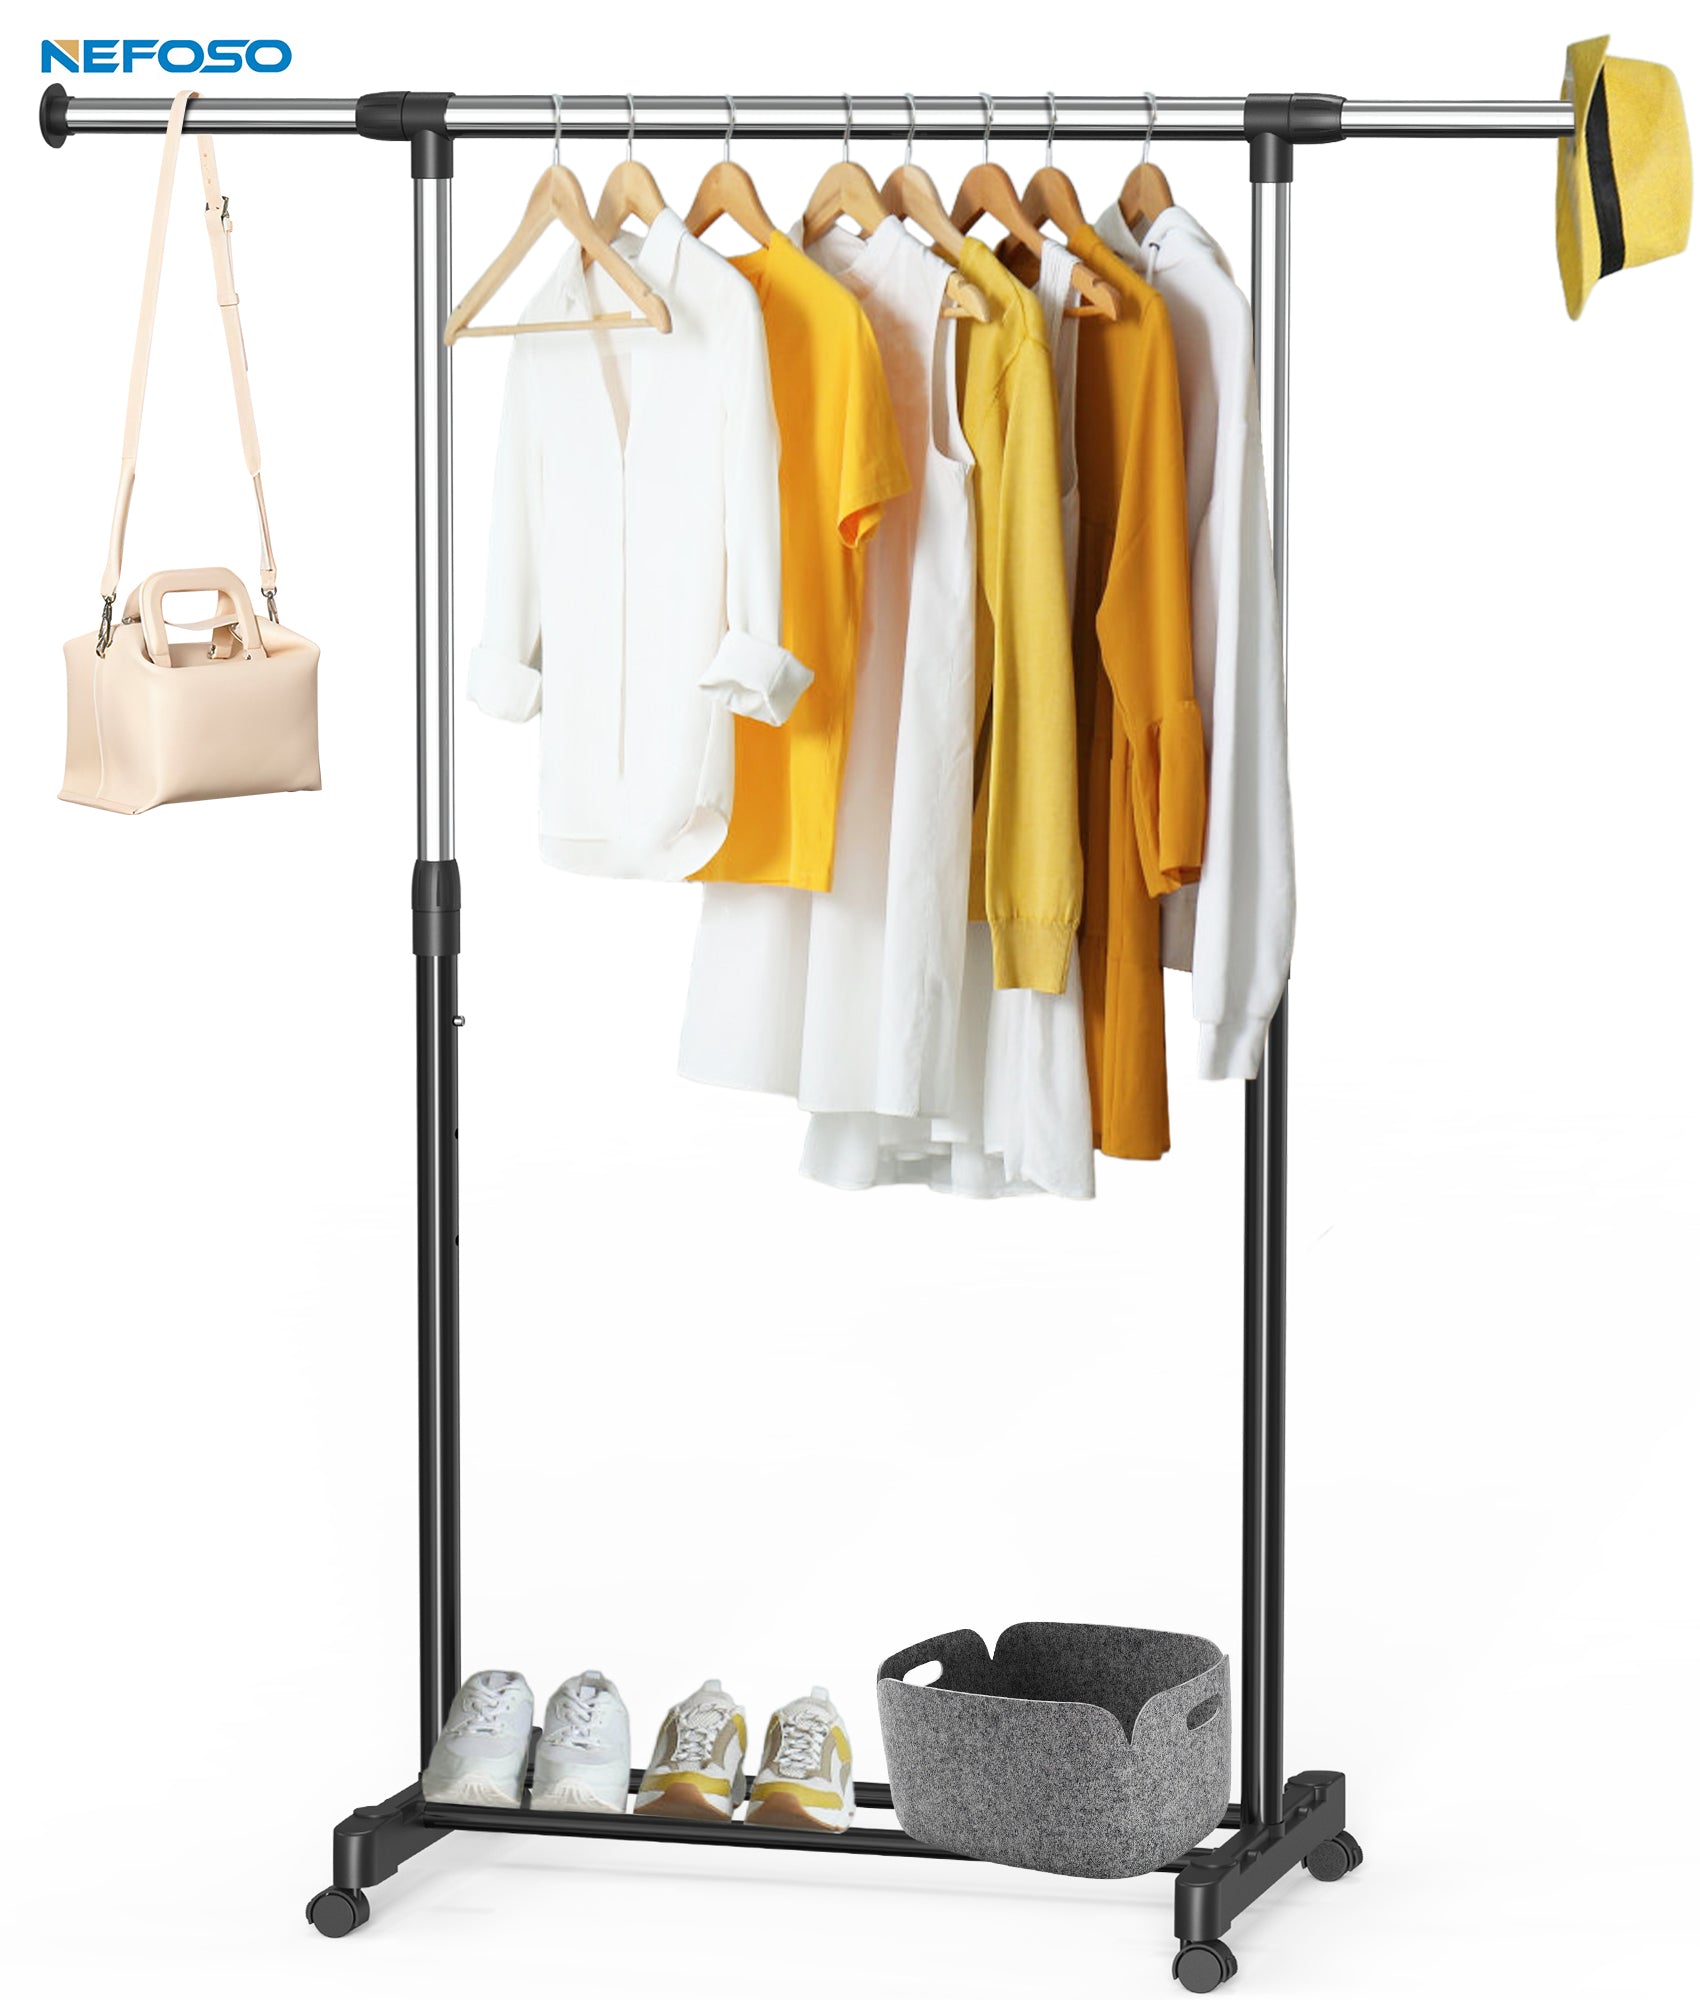 Nefoso Clothing Garment Rack with 4 Wheels Adjustable Standard